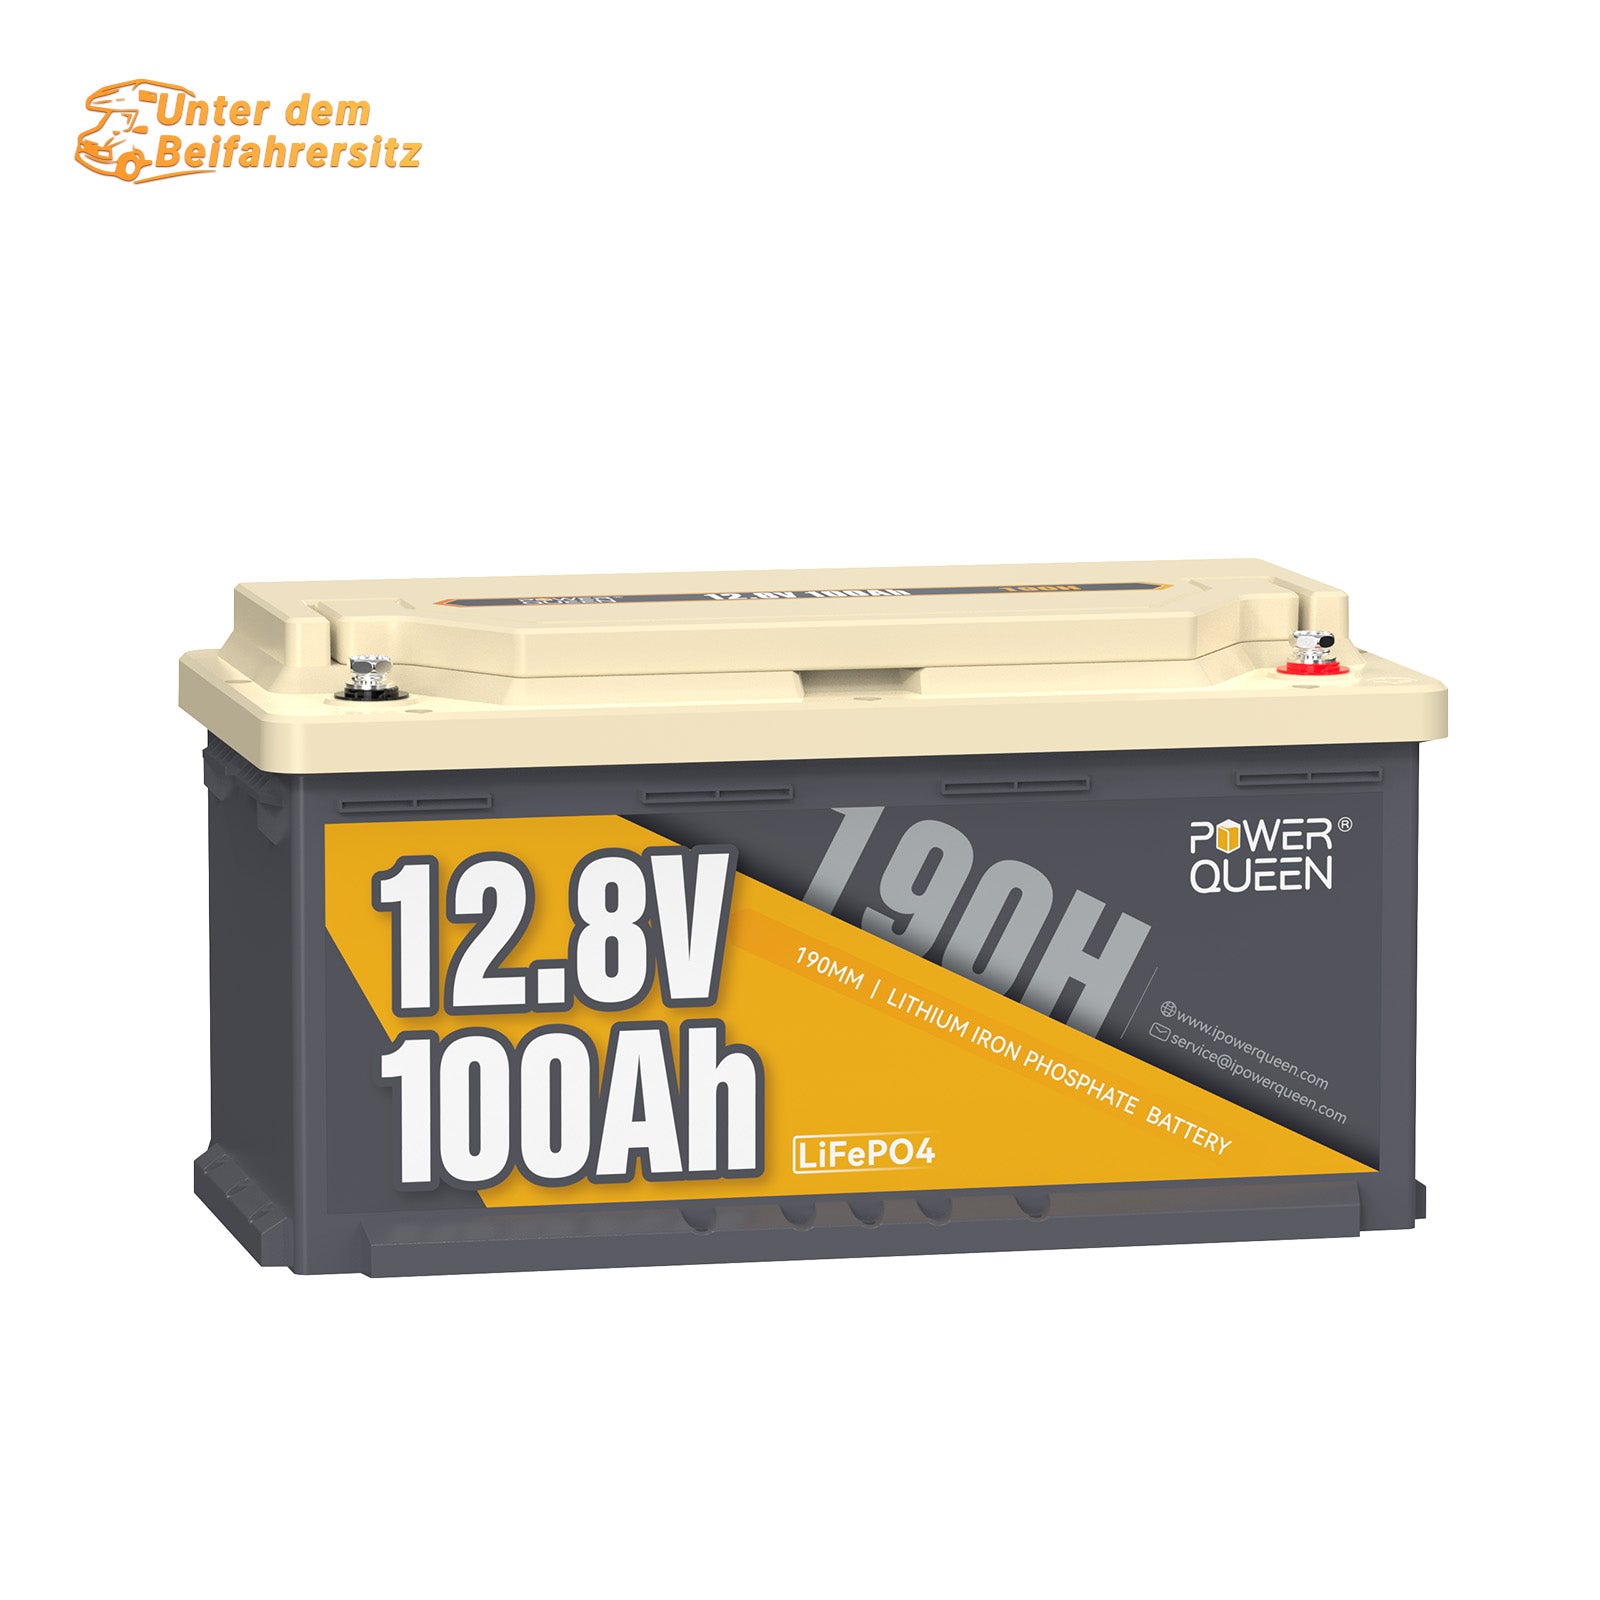 Batterie pour camping-car Power Queen 12 V (12,8 V) 100 Ah 190 H LiFePO4